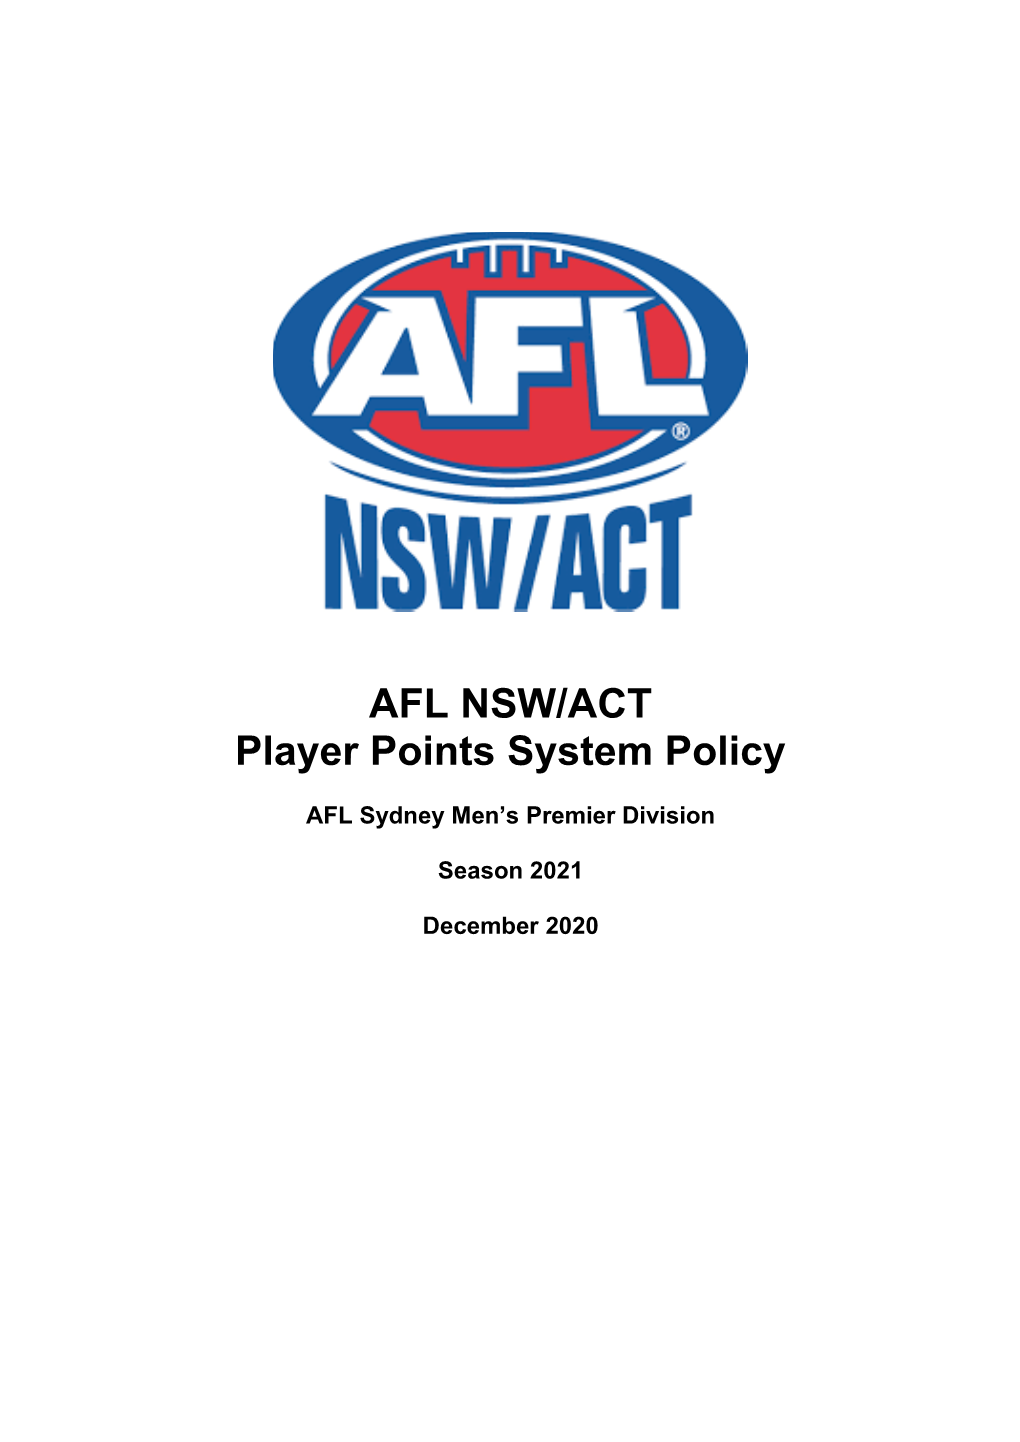 2021 AFL Sydney Men's Premier Division Player Points Policy